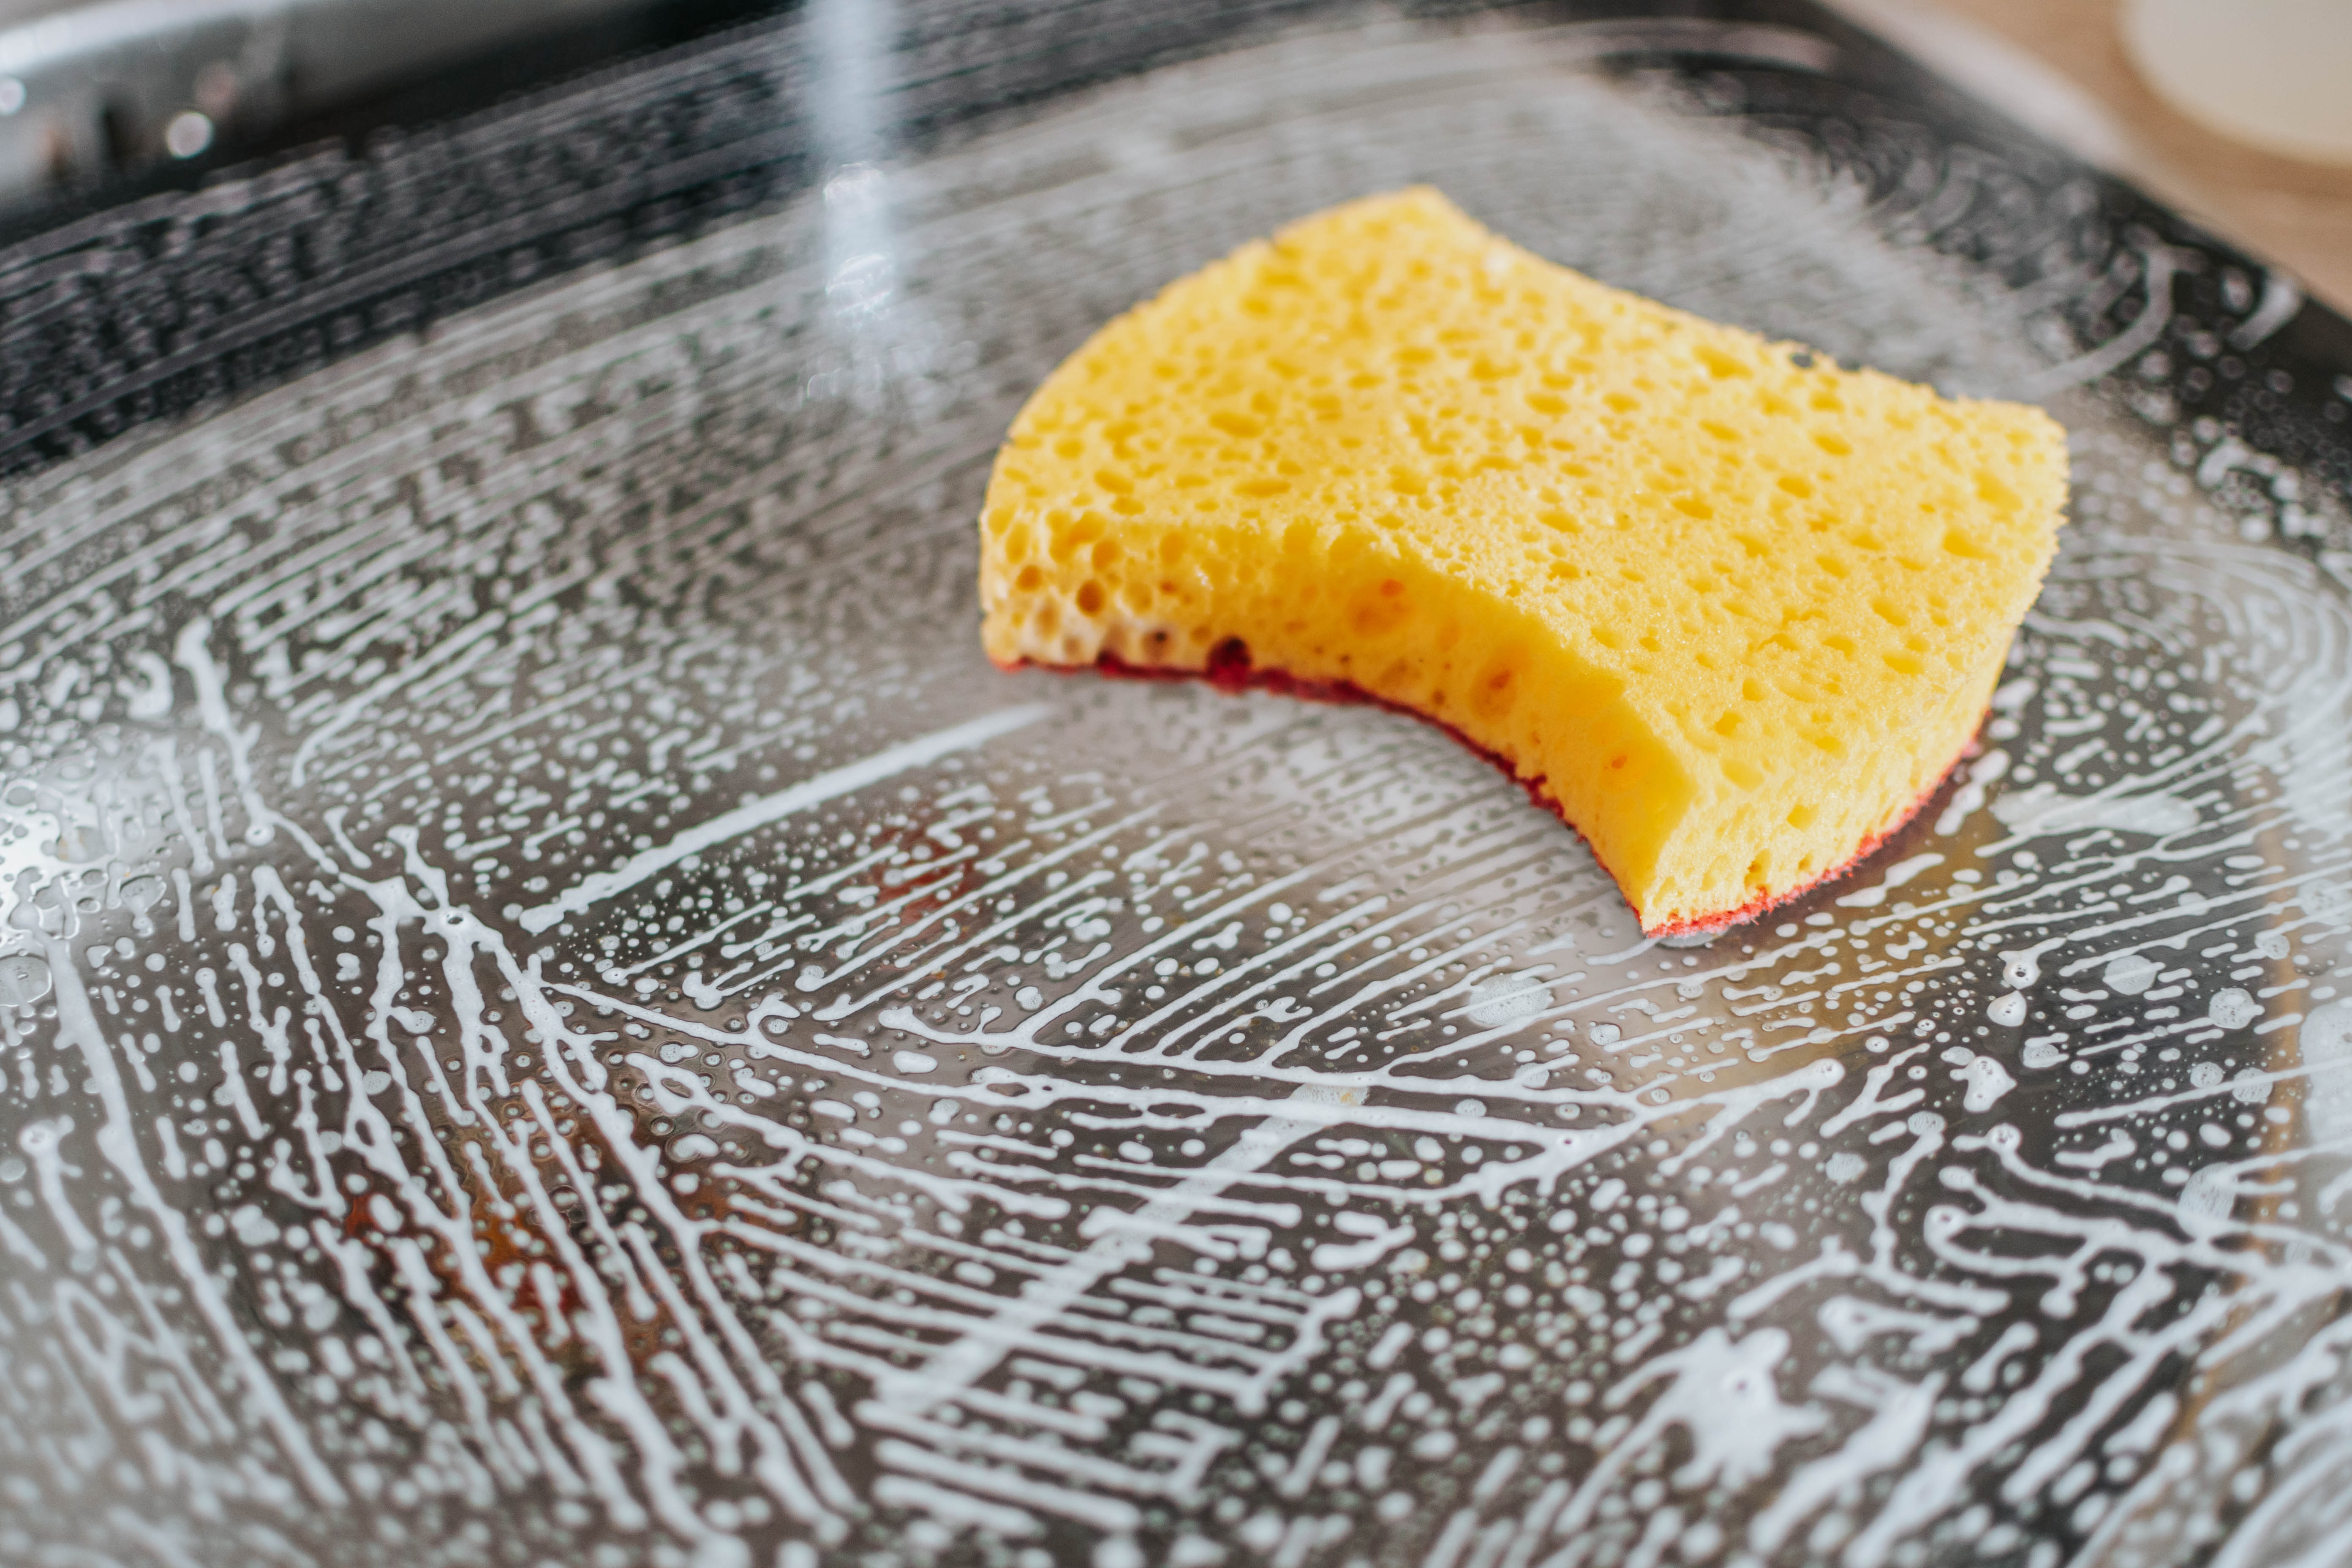 Sponge and soap on glass surface; image by Pille R. Priske, via Unsplash.com.